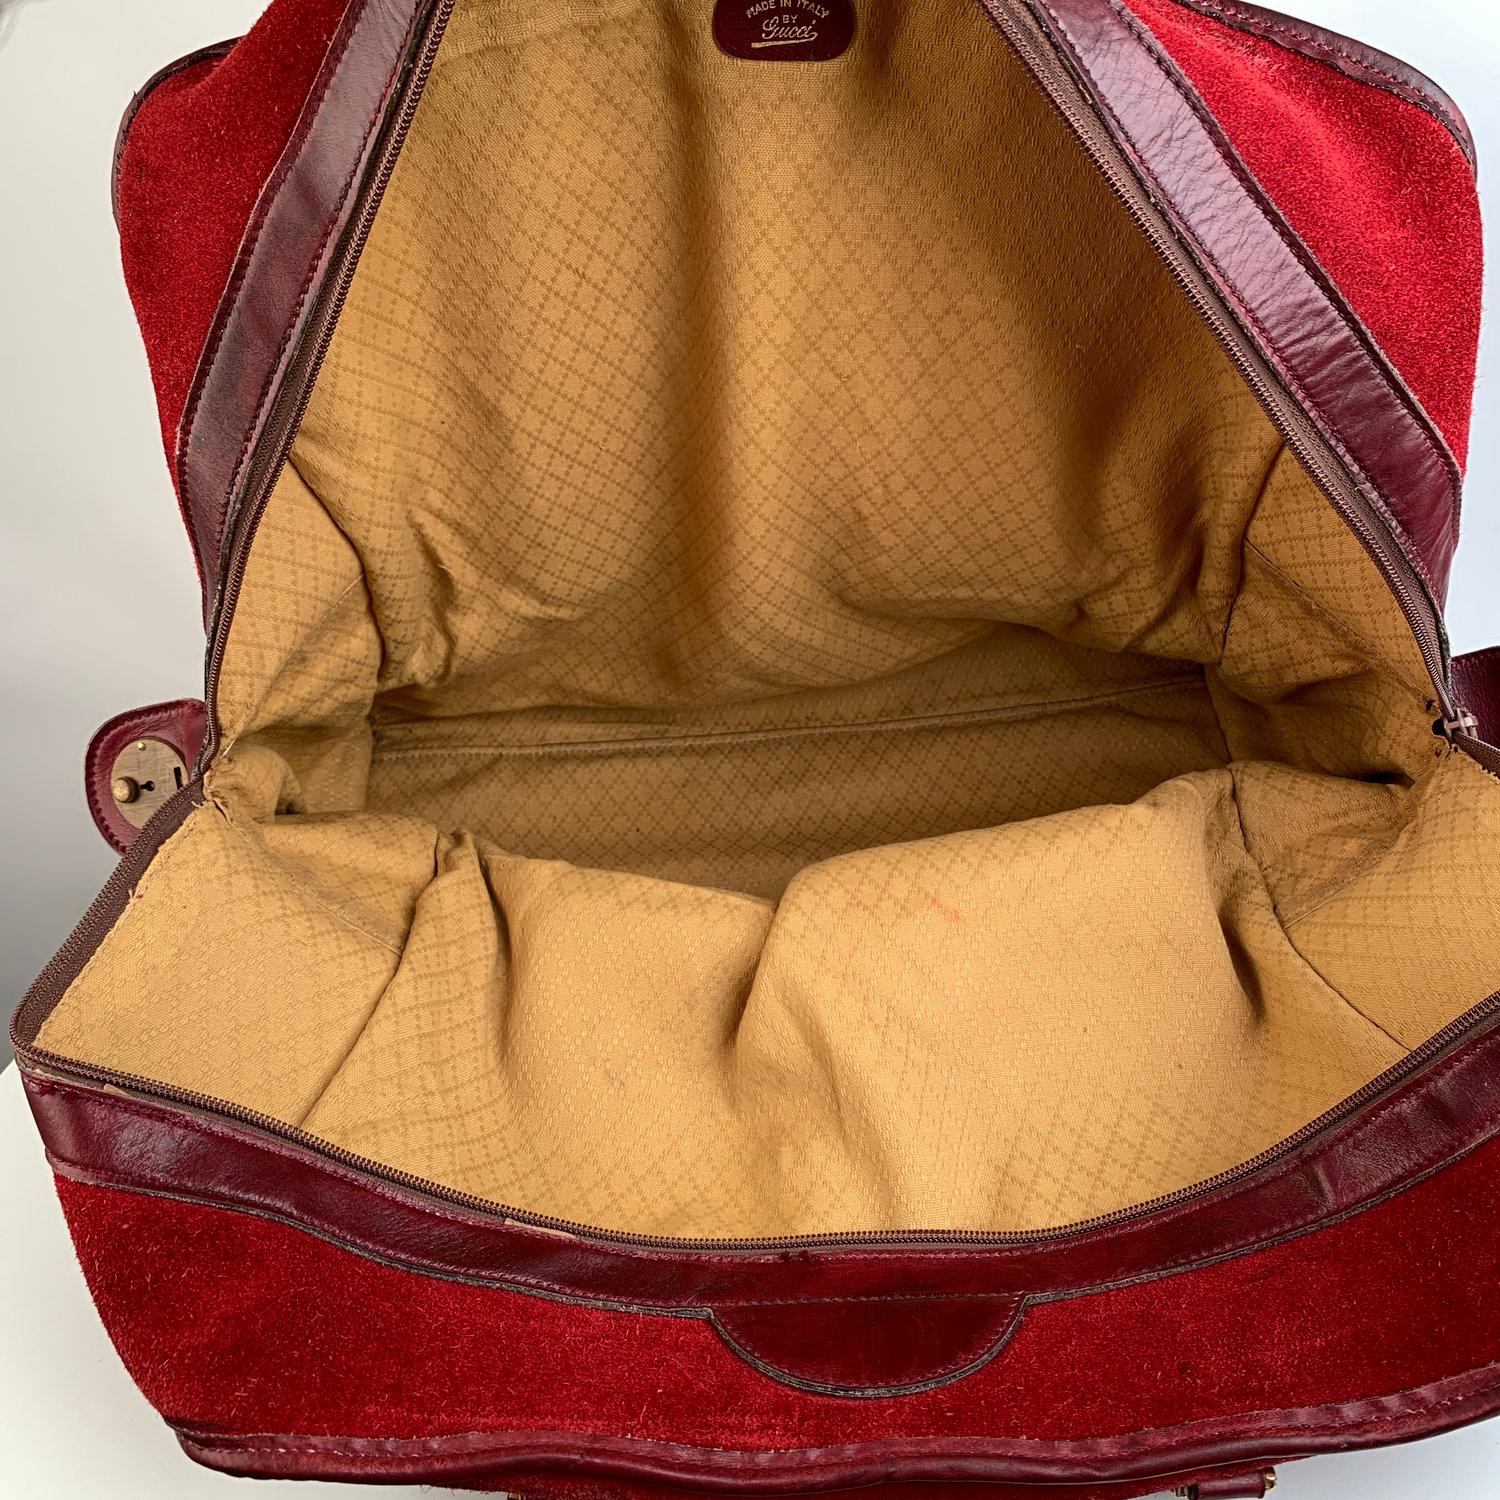 Gucci Vintage Red Suede Weekender Travel Bag with Stripes 8